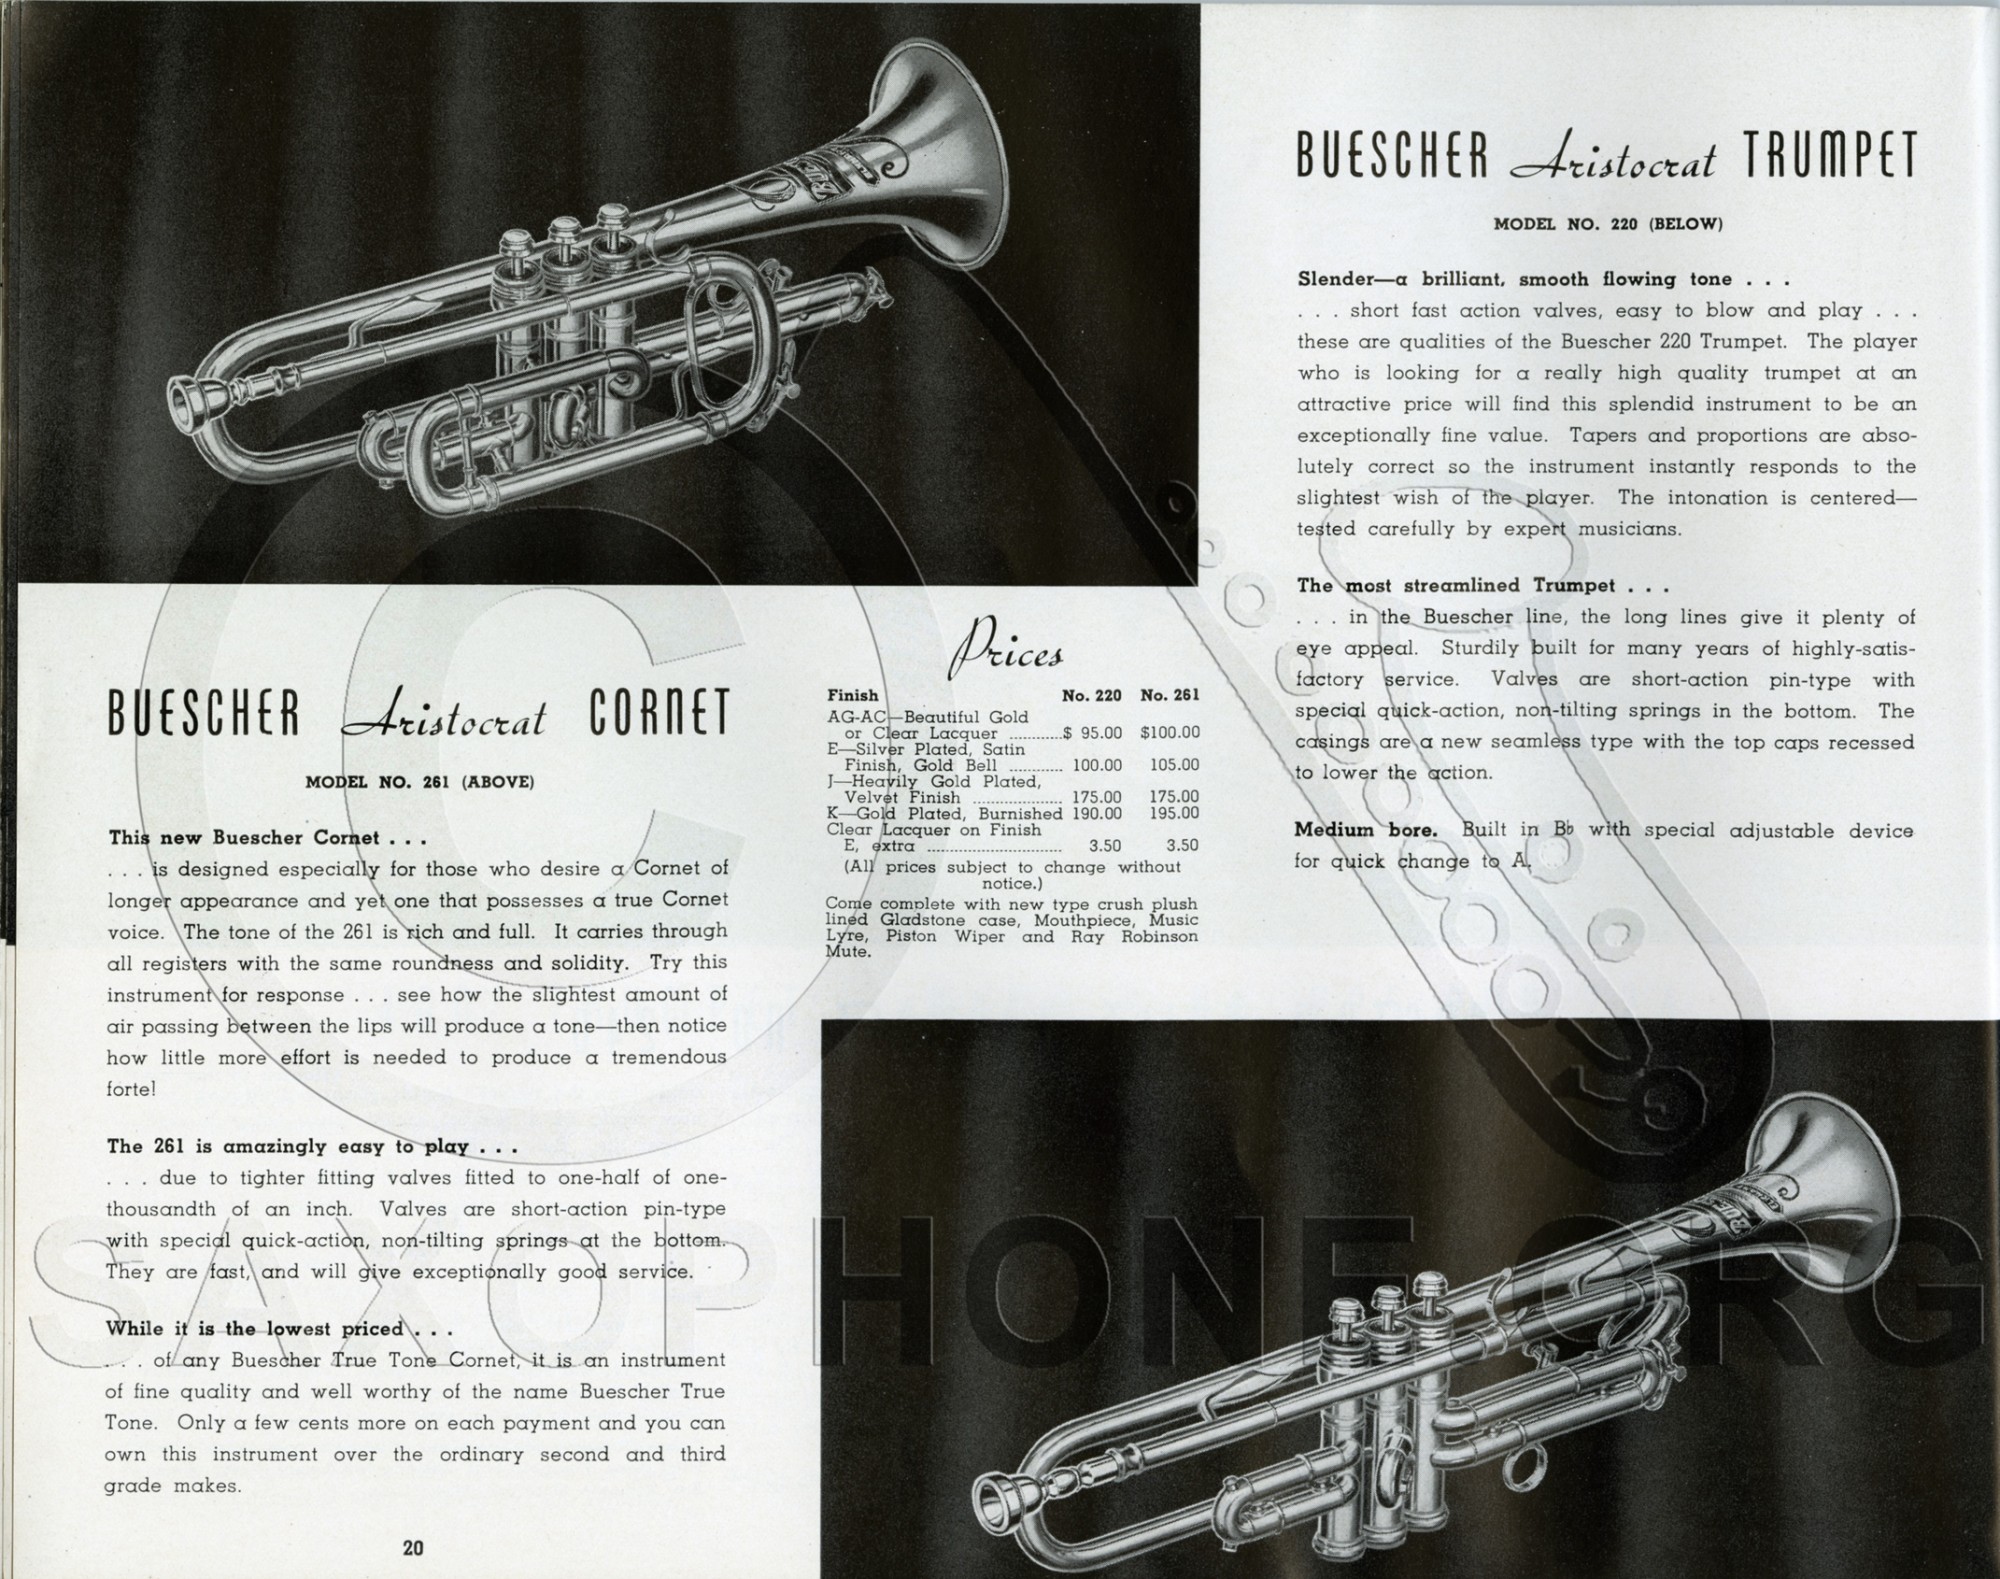 value buescher true tone trumpet